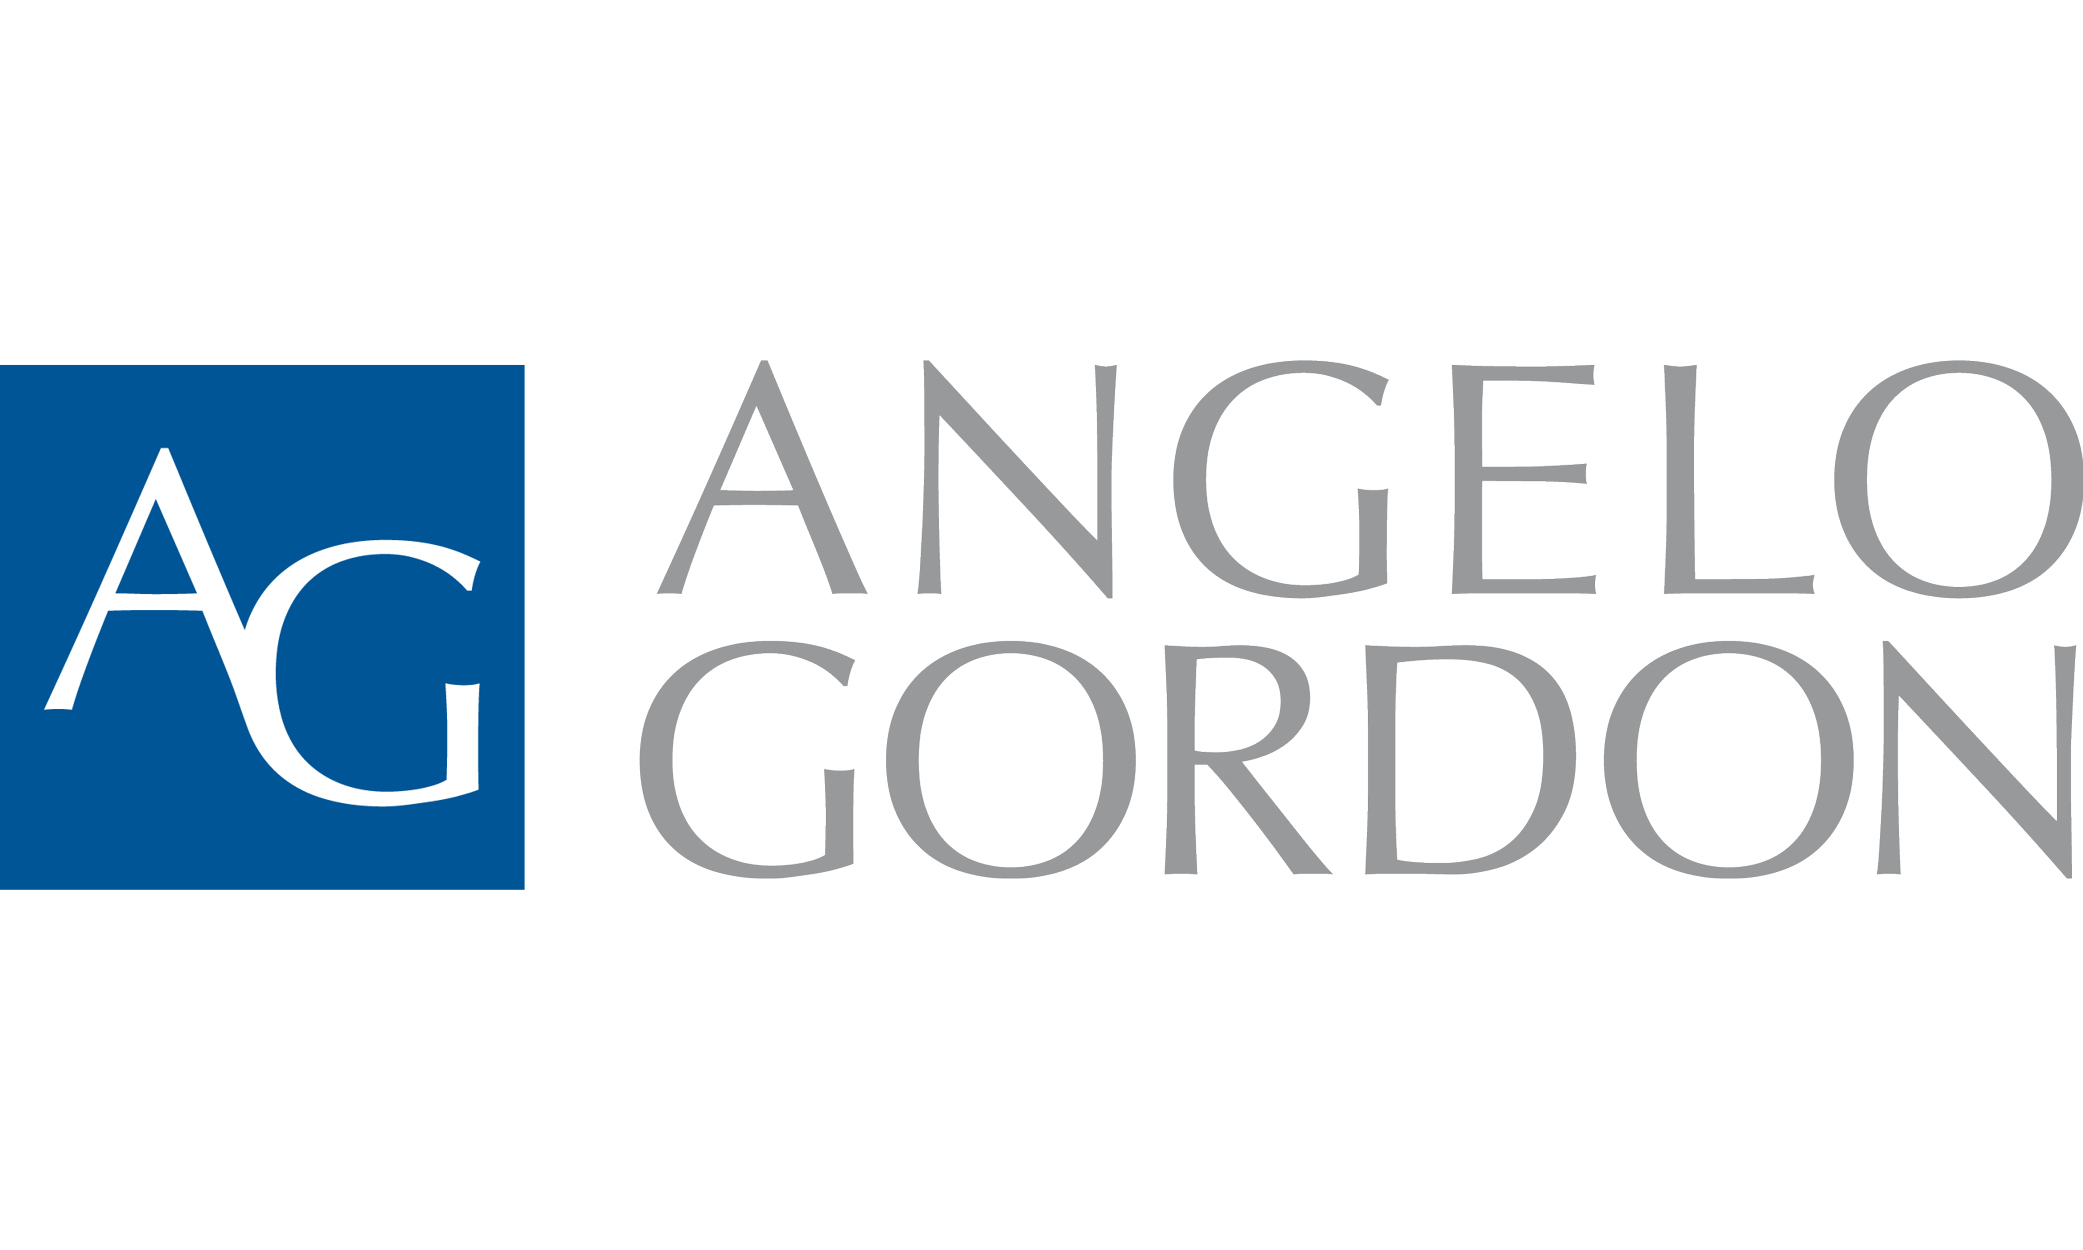 Angelo Gordon